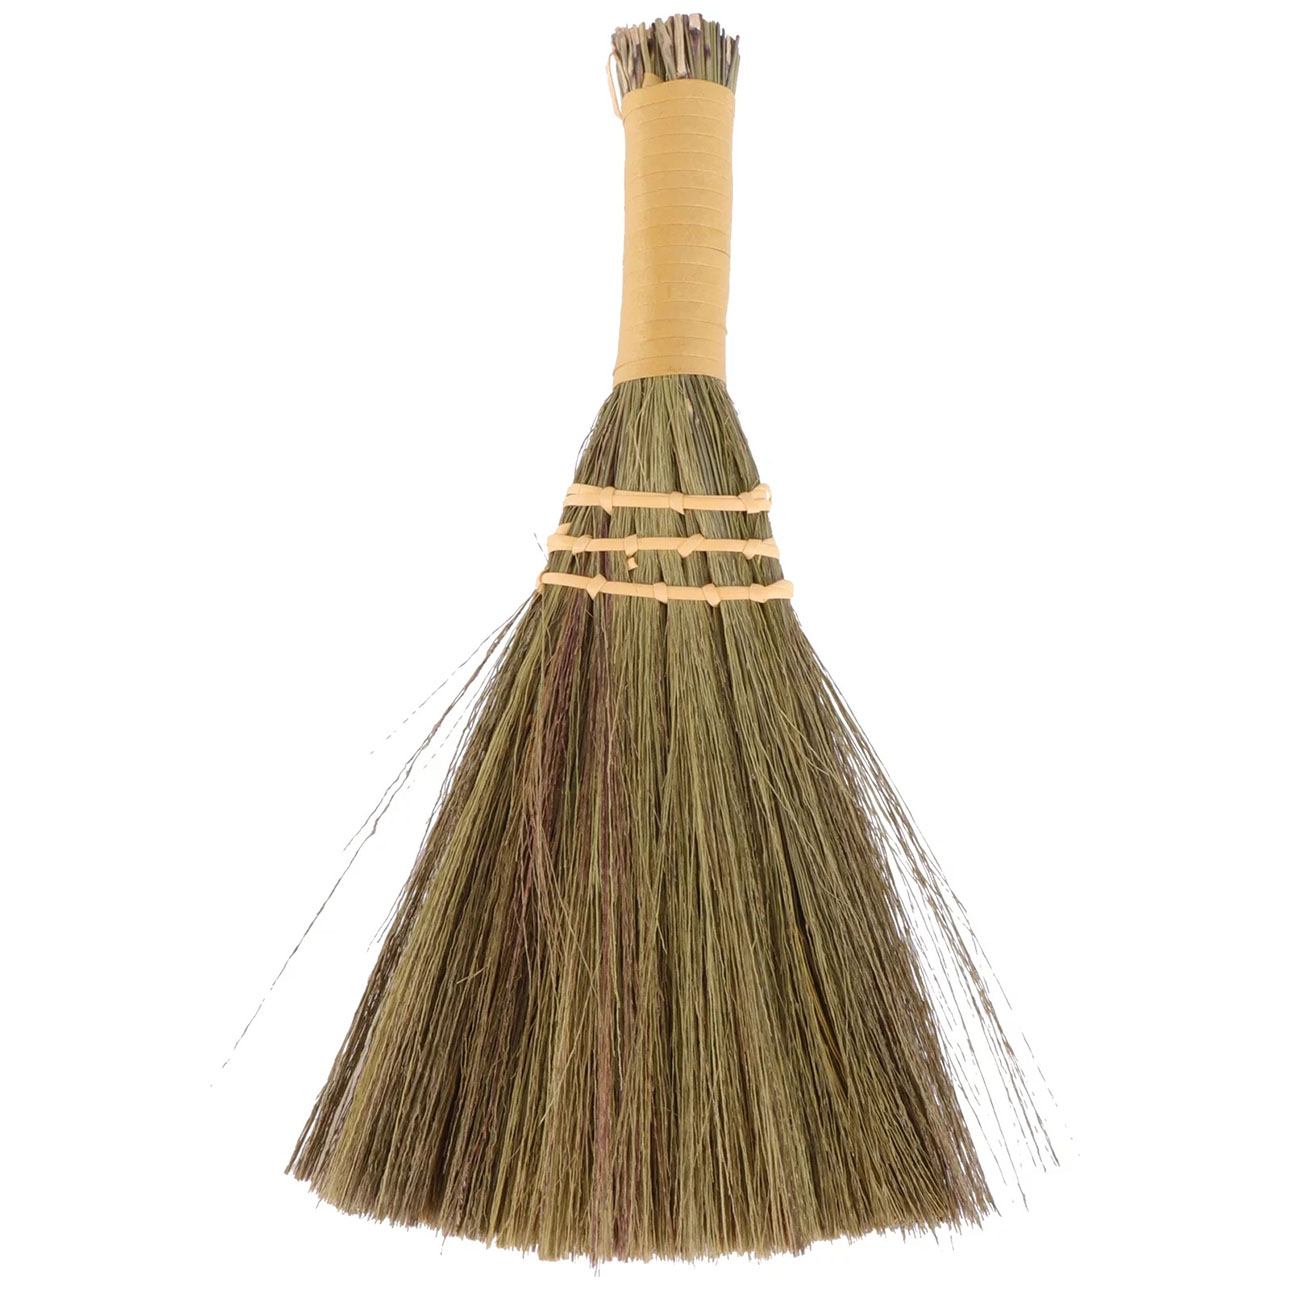 How To Make Cinnamon Broom Smell Again